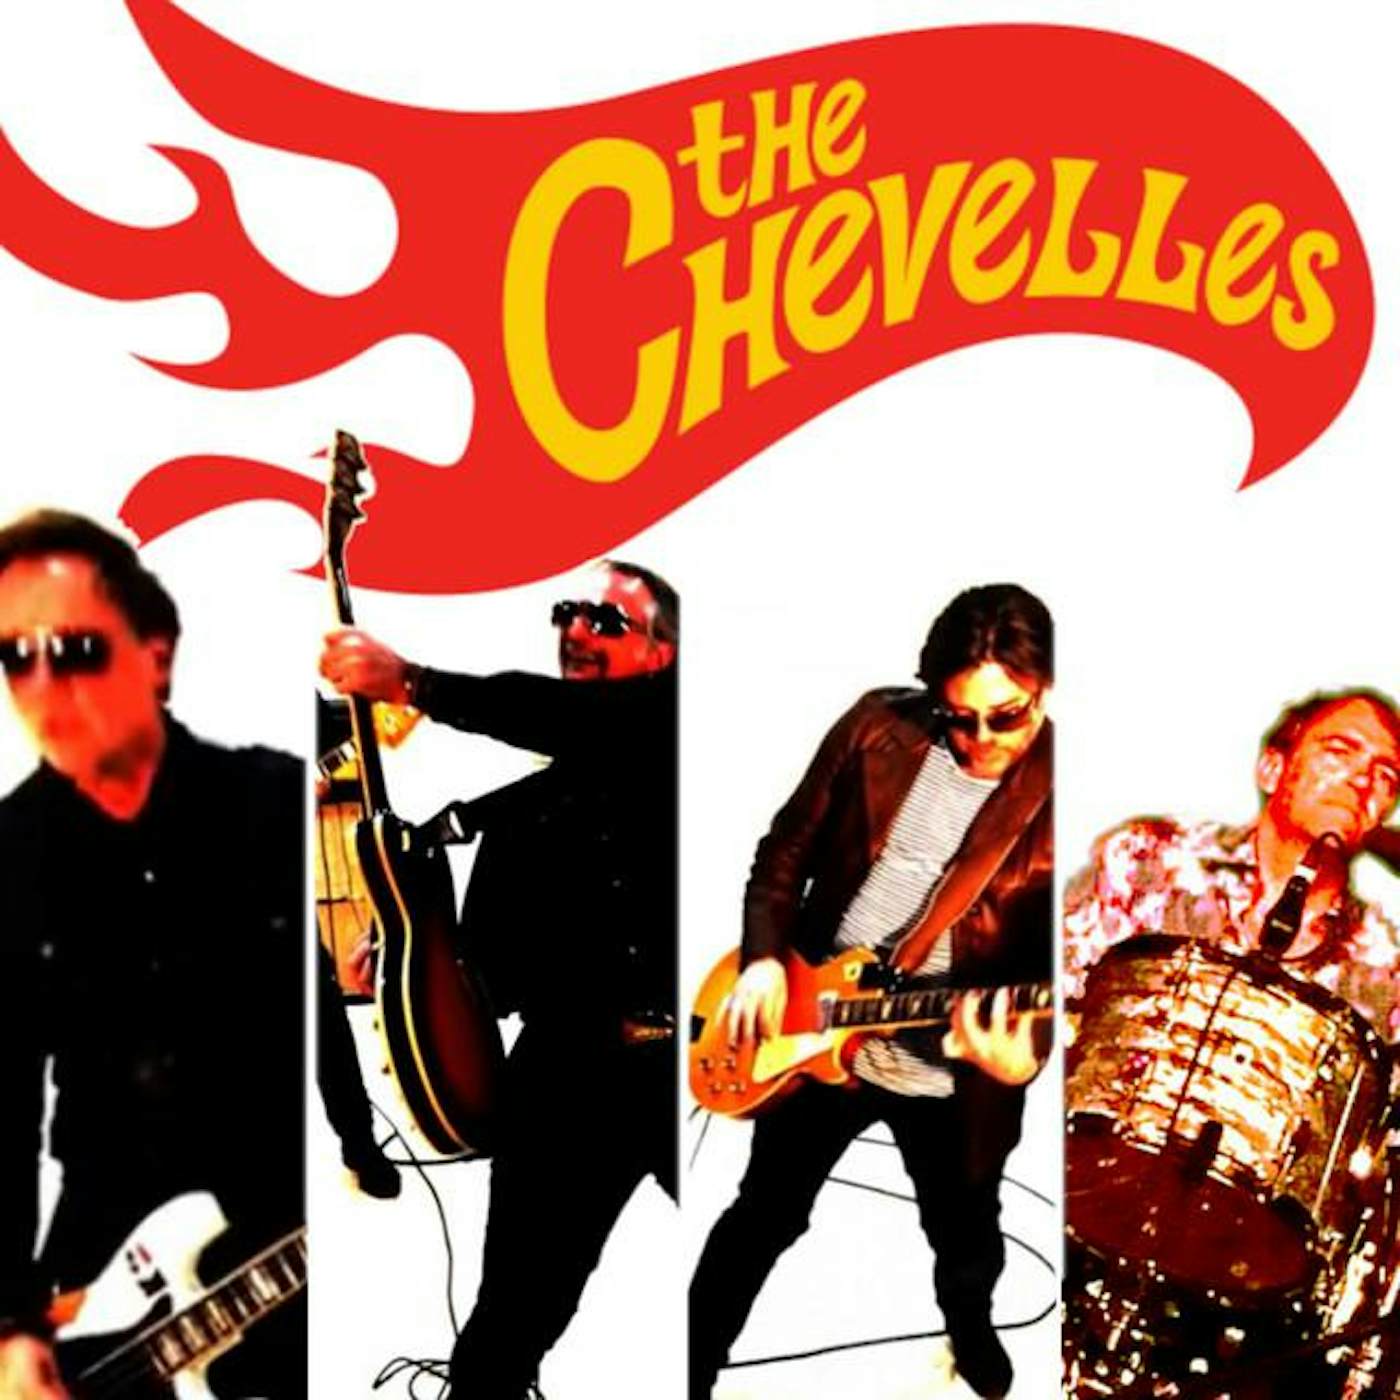 The Chevelles